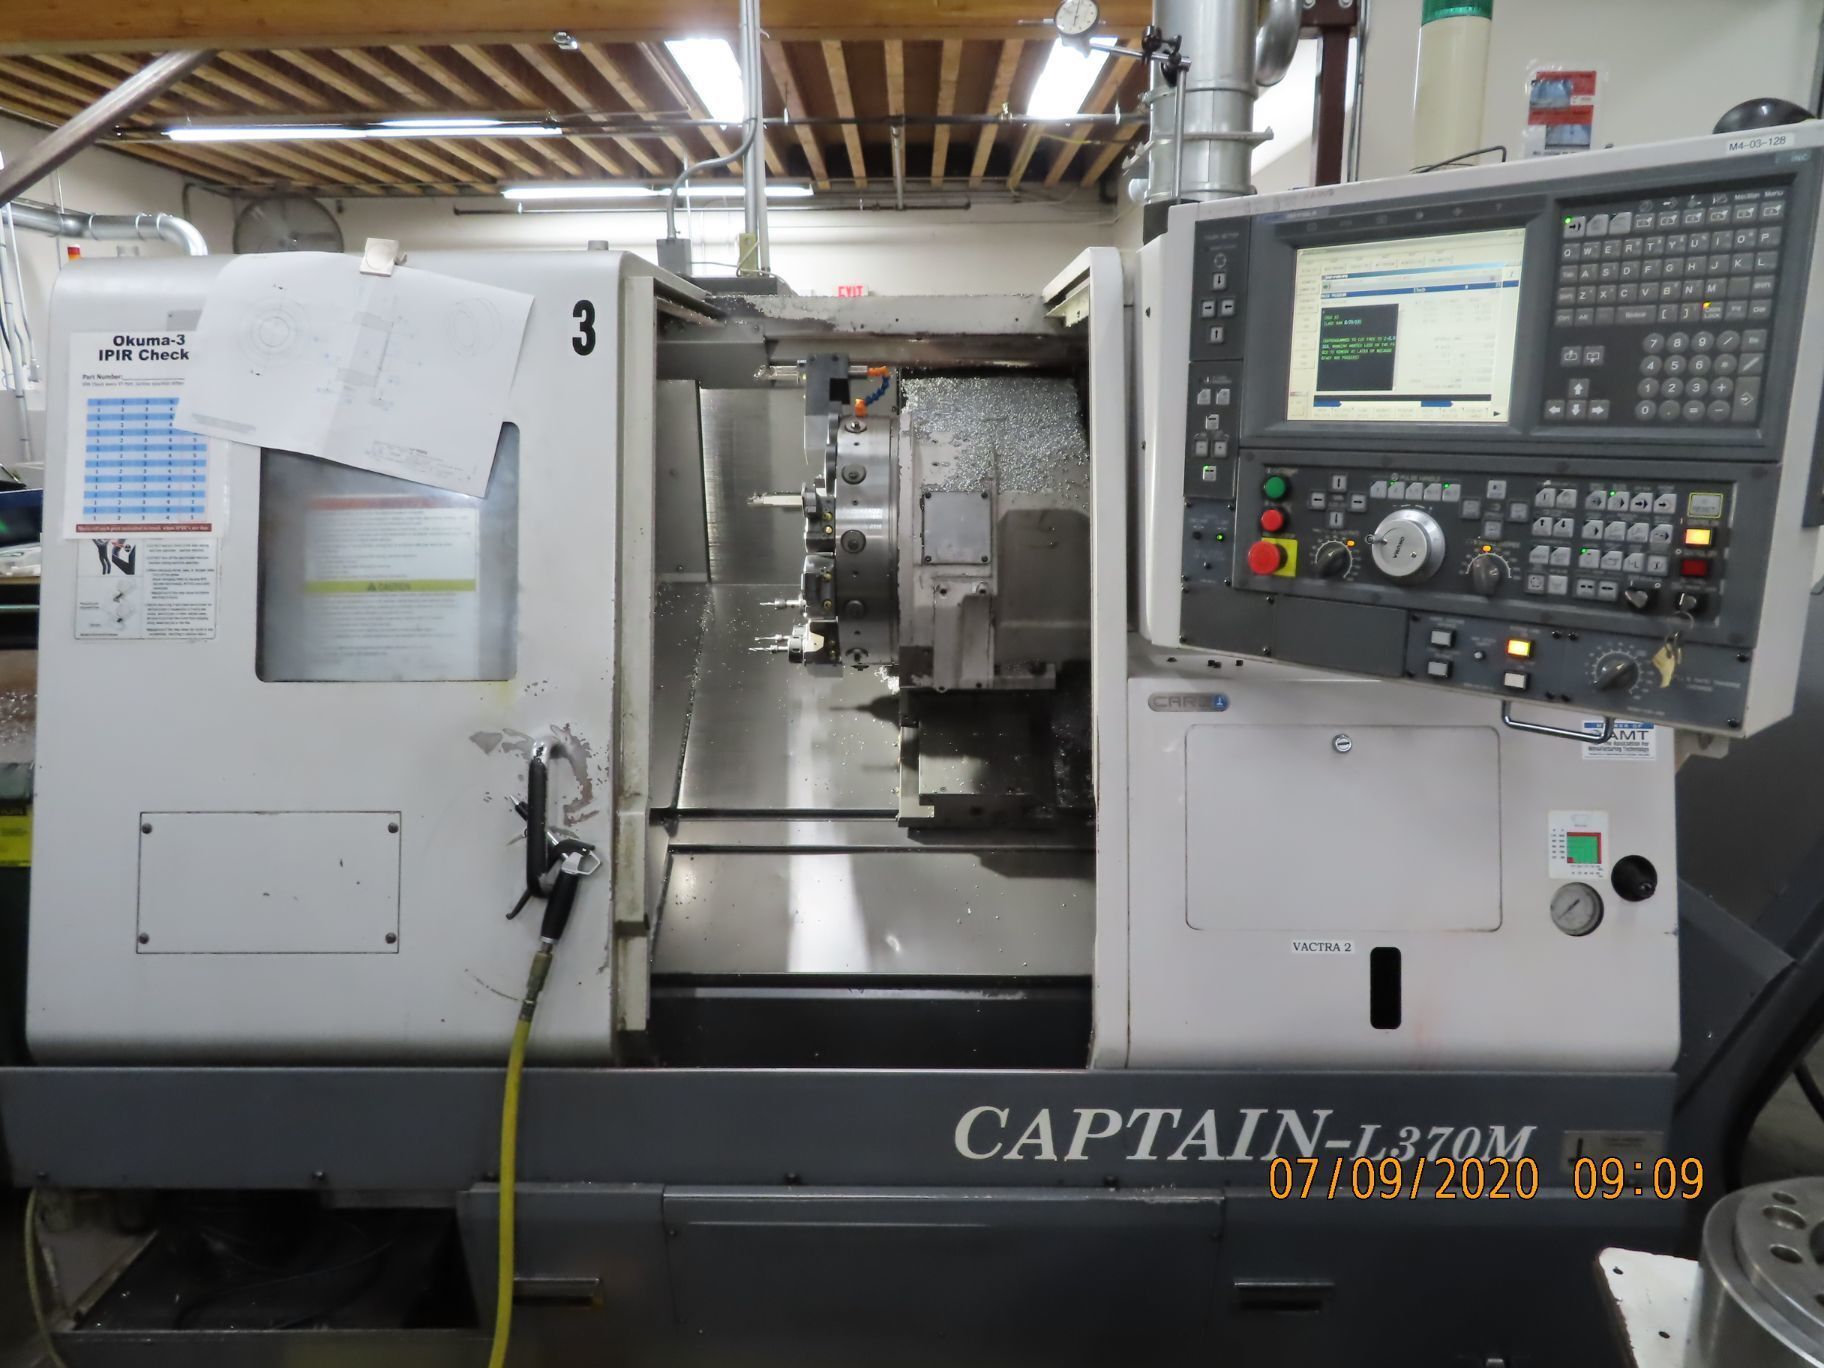 BYJC-OKUMA MACHINE TOOL COMPANY CAPTAIN L370 Sold Equipment | MD Equipment Services LLC